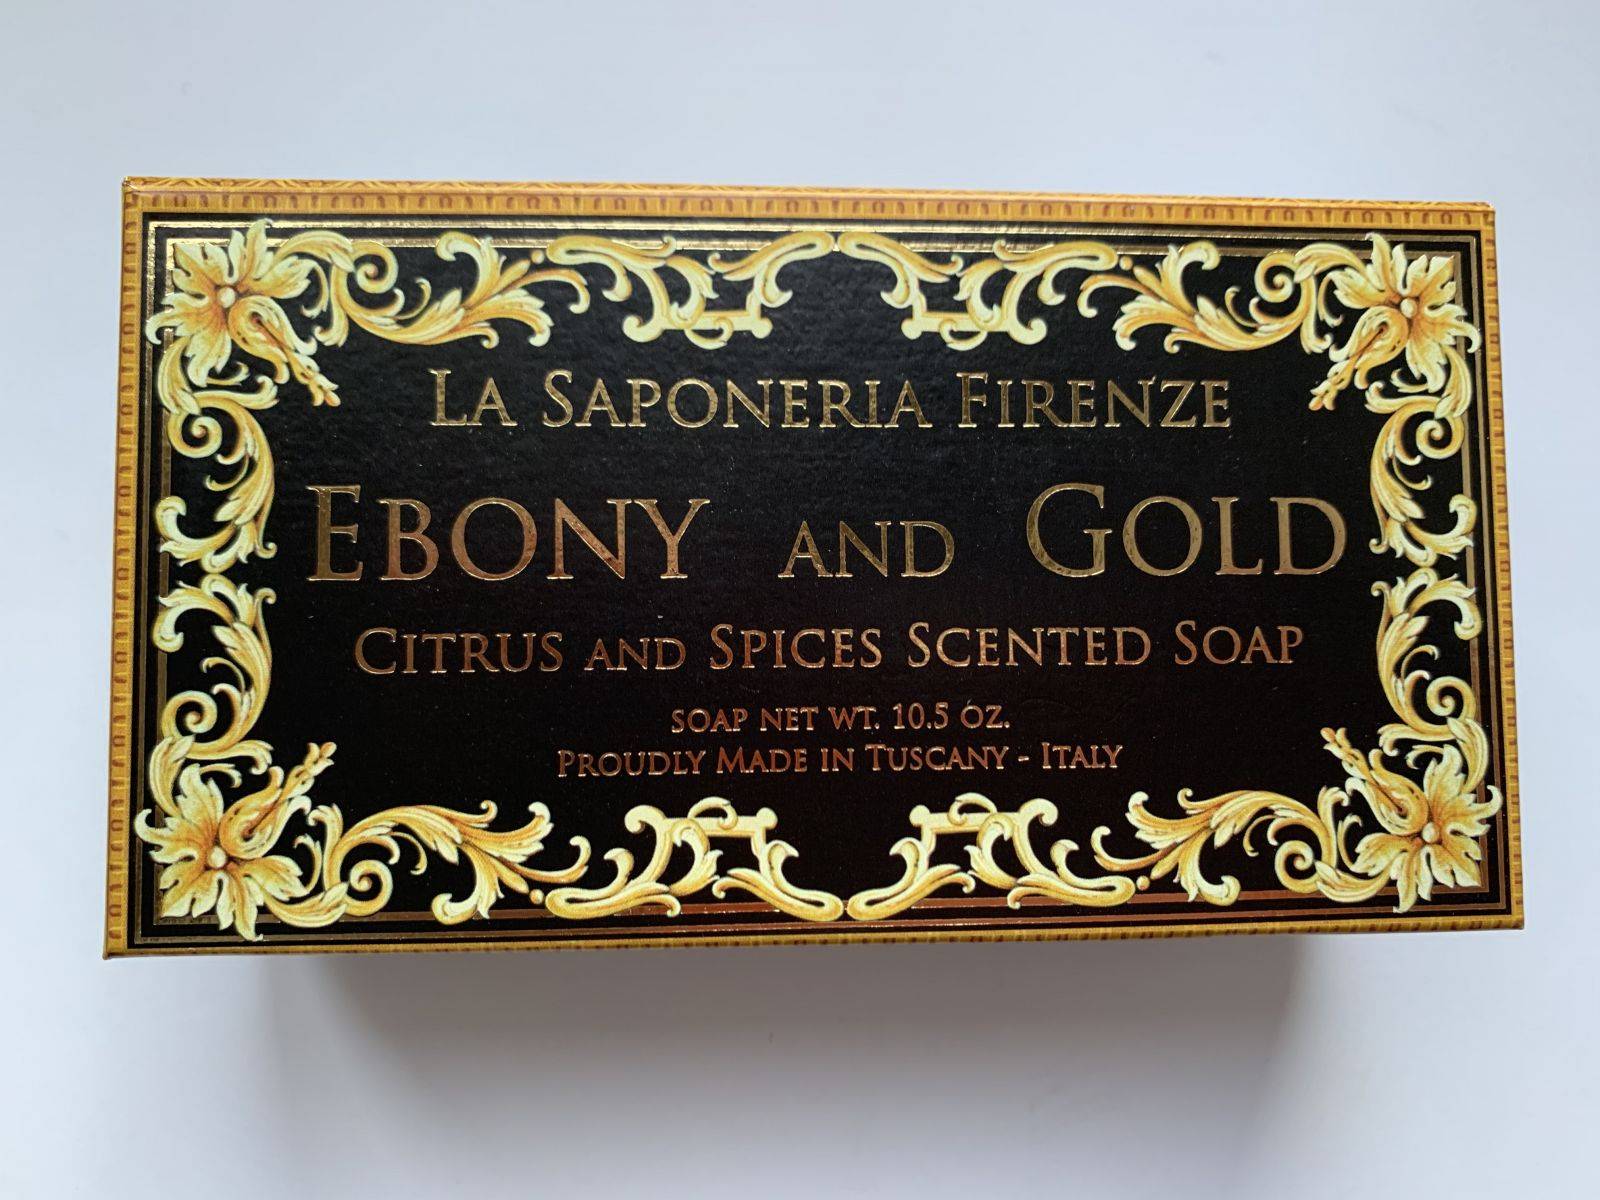 Mýdlo Fiorentino Ebony and gold 300g